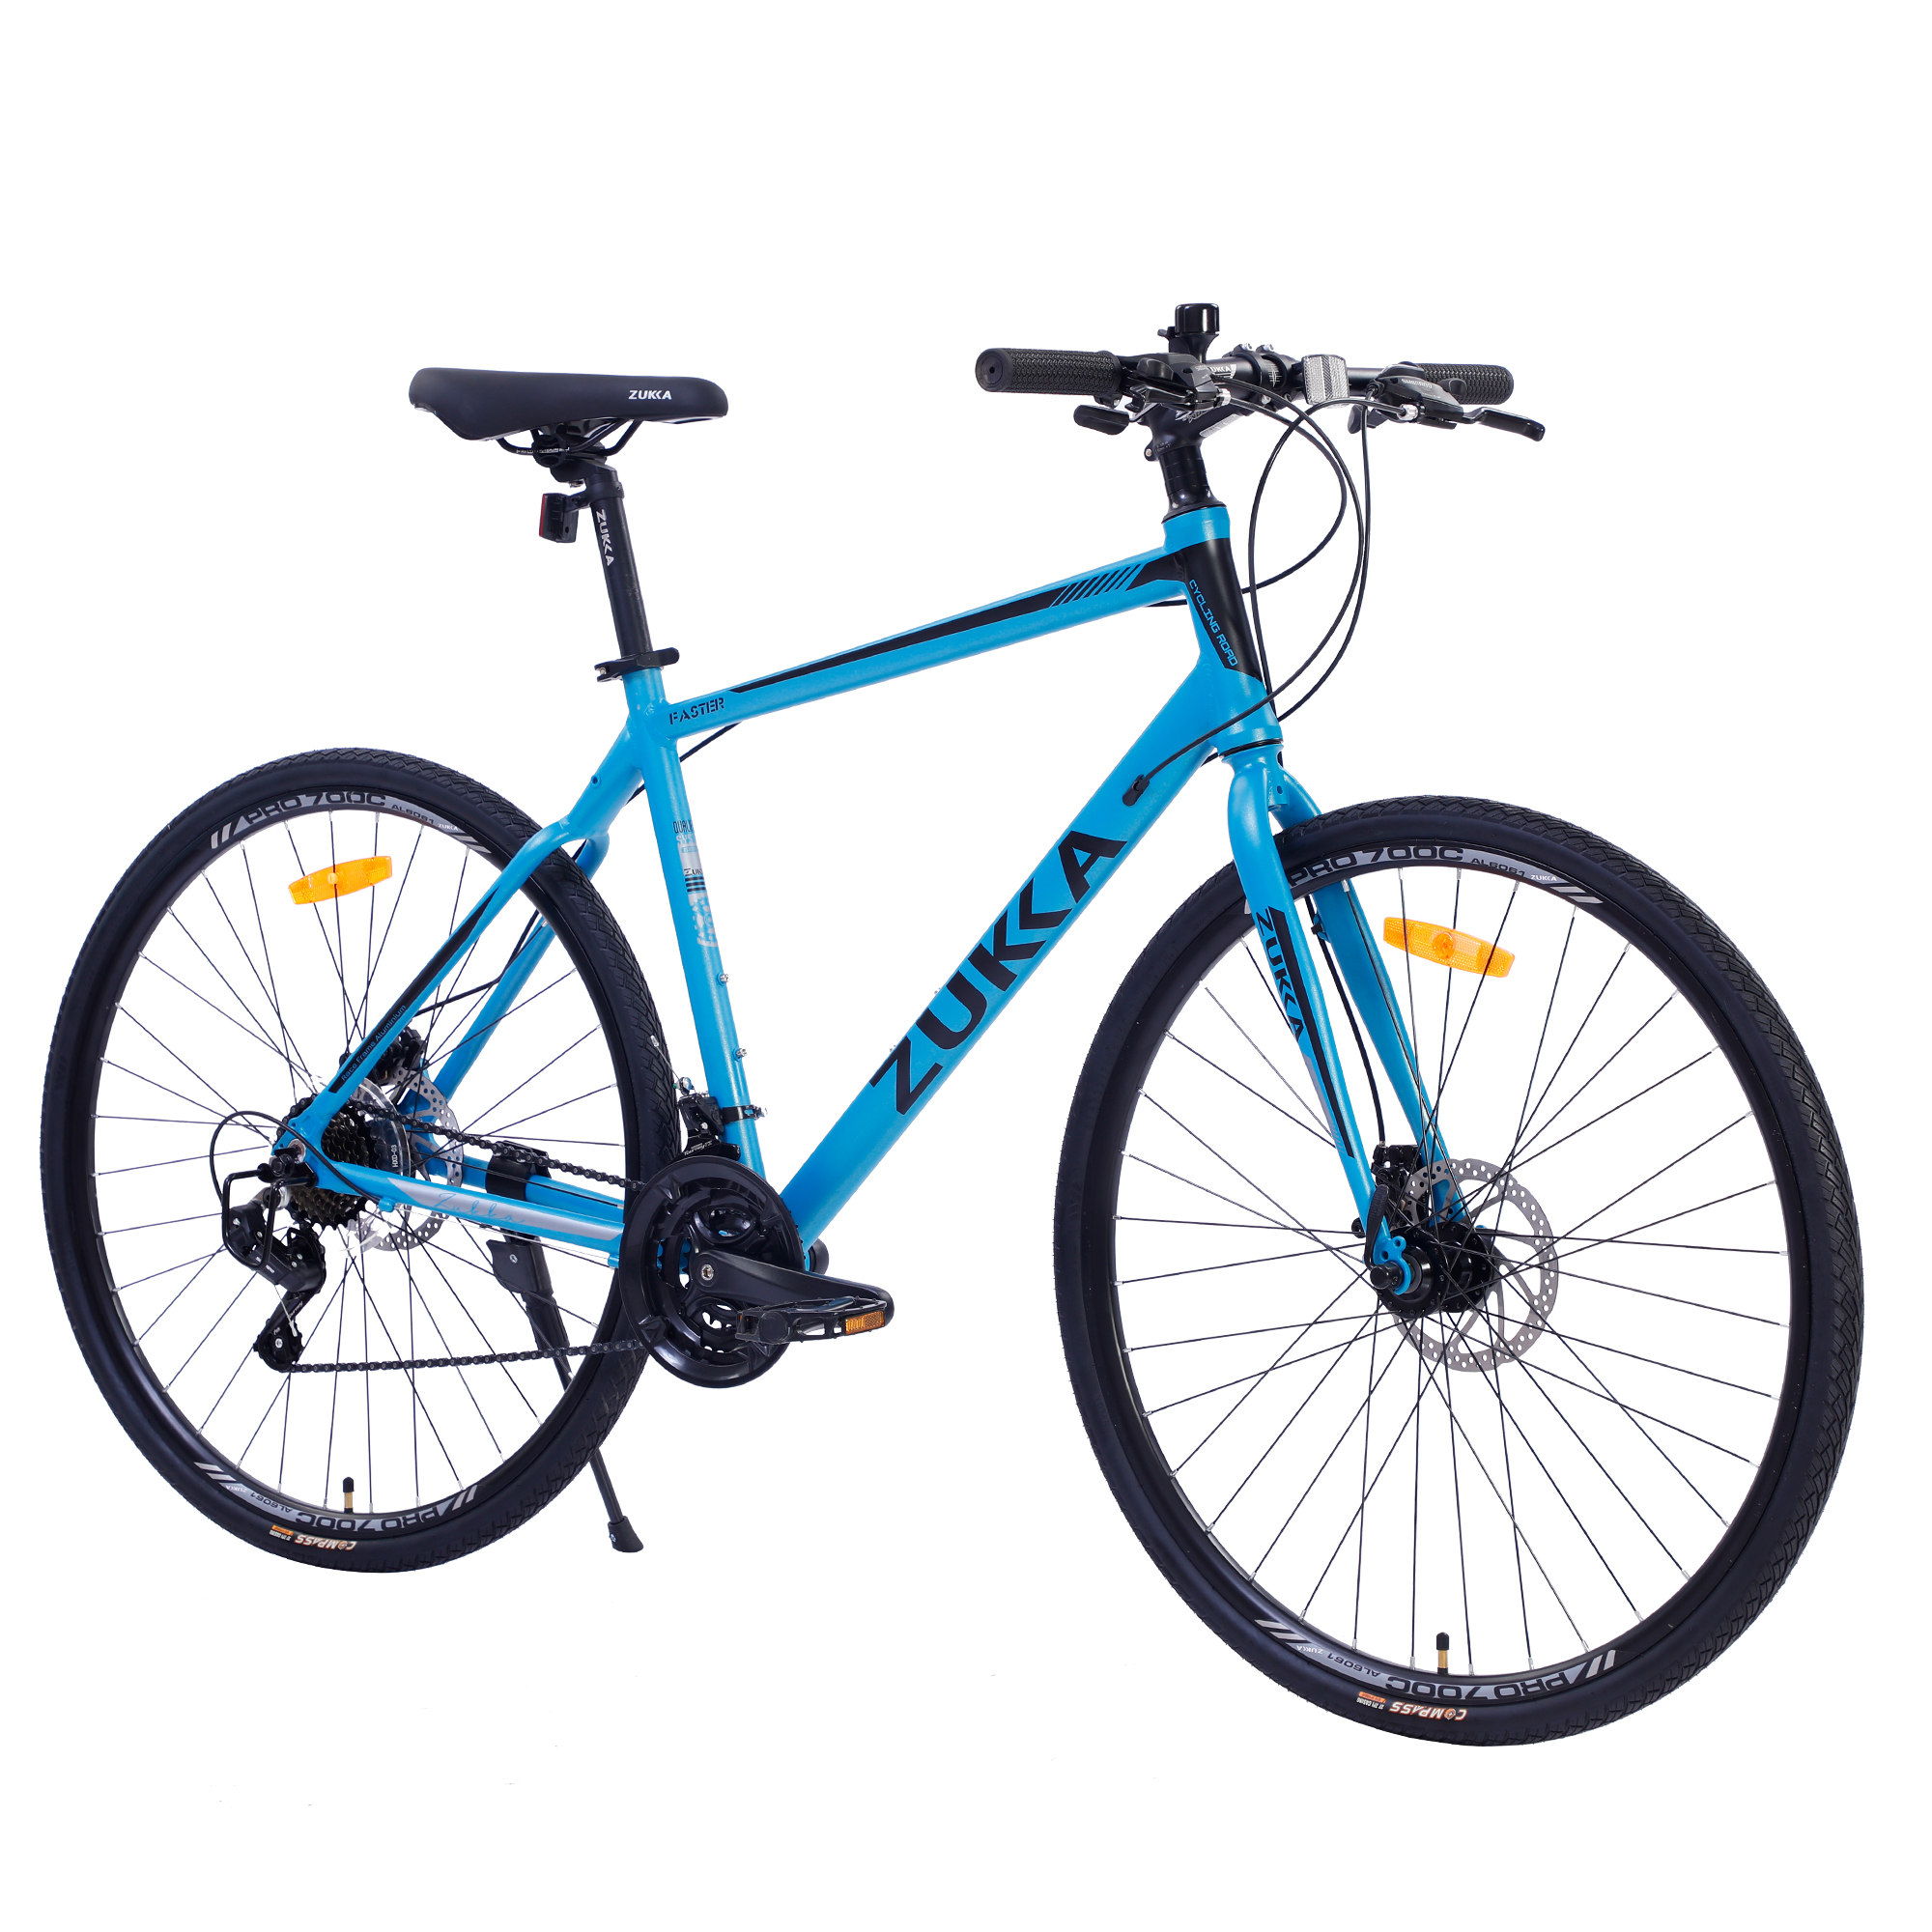 Segmart 21-Speed Mountain Bike, 28-inch Wheels Lightweight Road Bike, Hybrid Aluminum Frame and Upgrade Dual Disc Brake MTB for Men Women Adult, Blue SS2055 - image 1 of 7